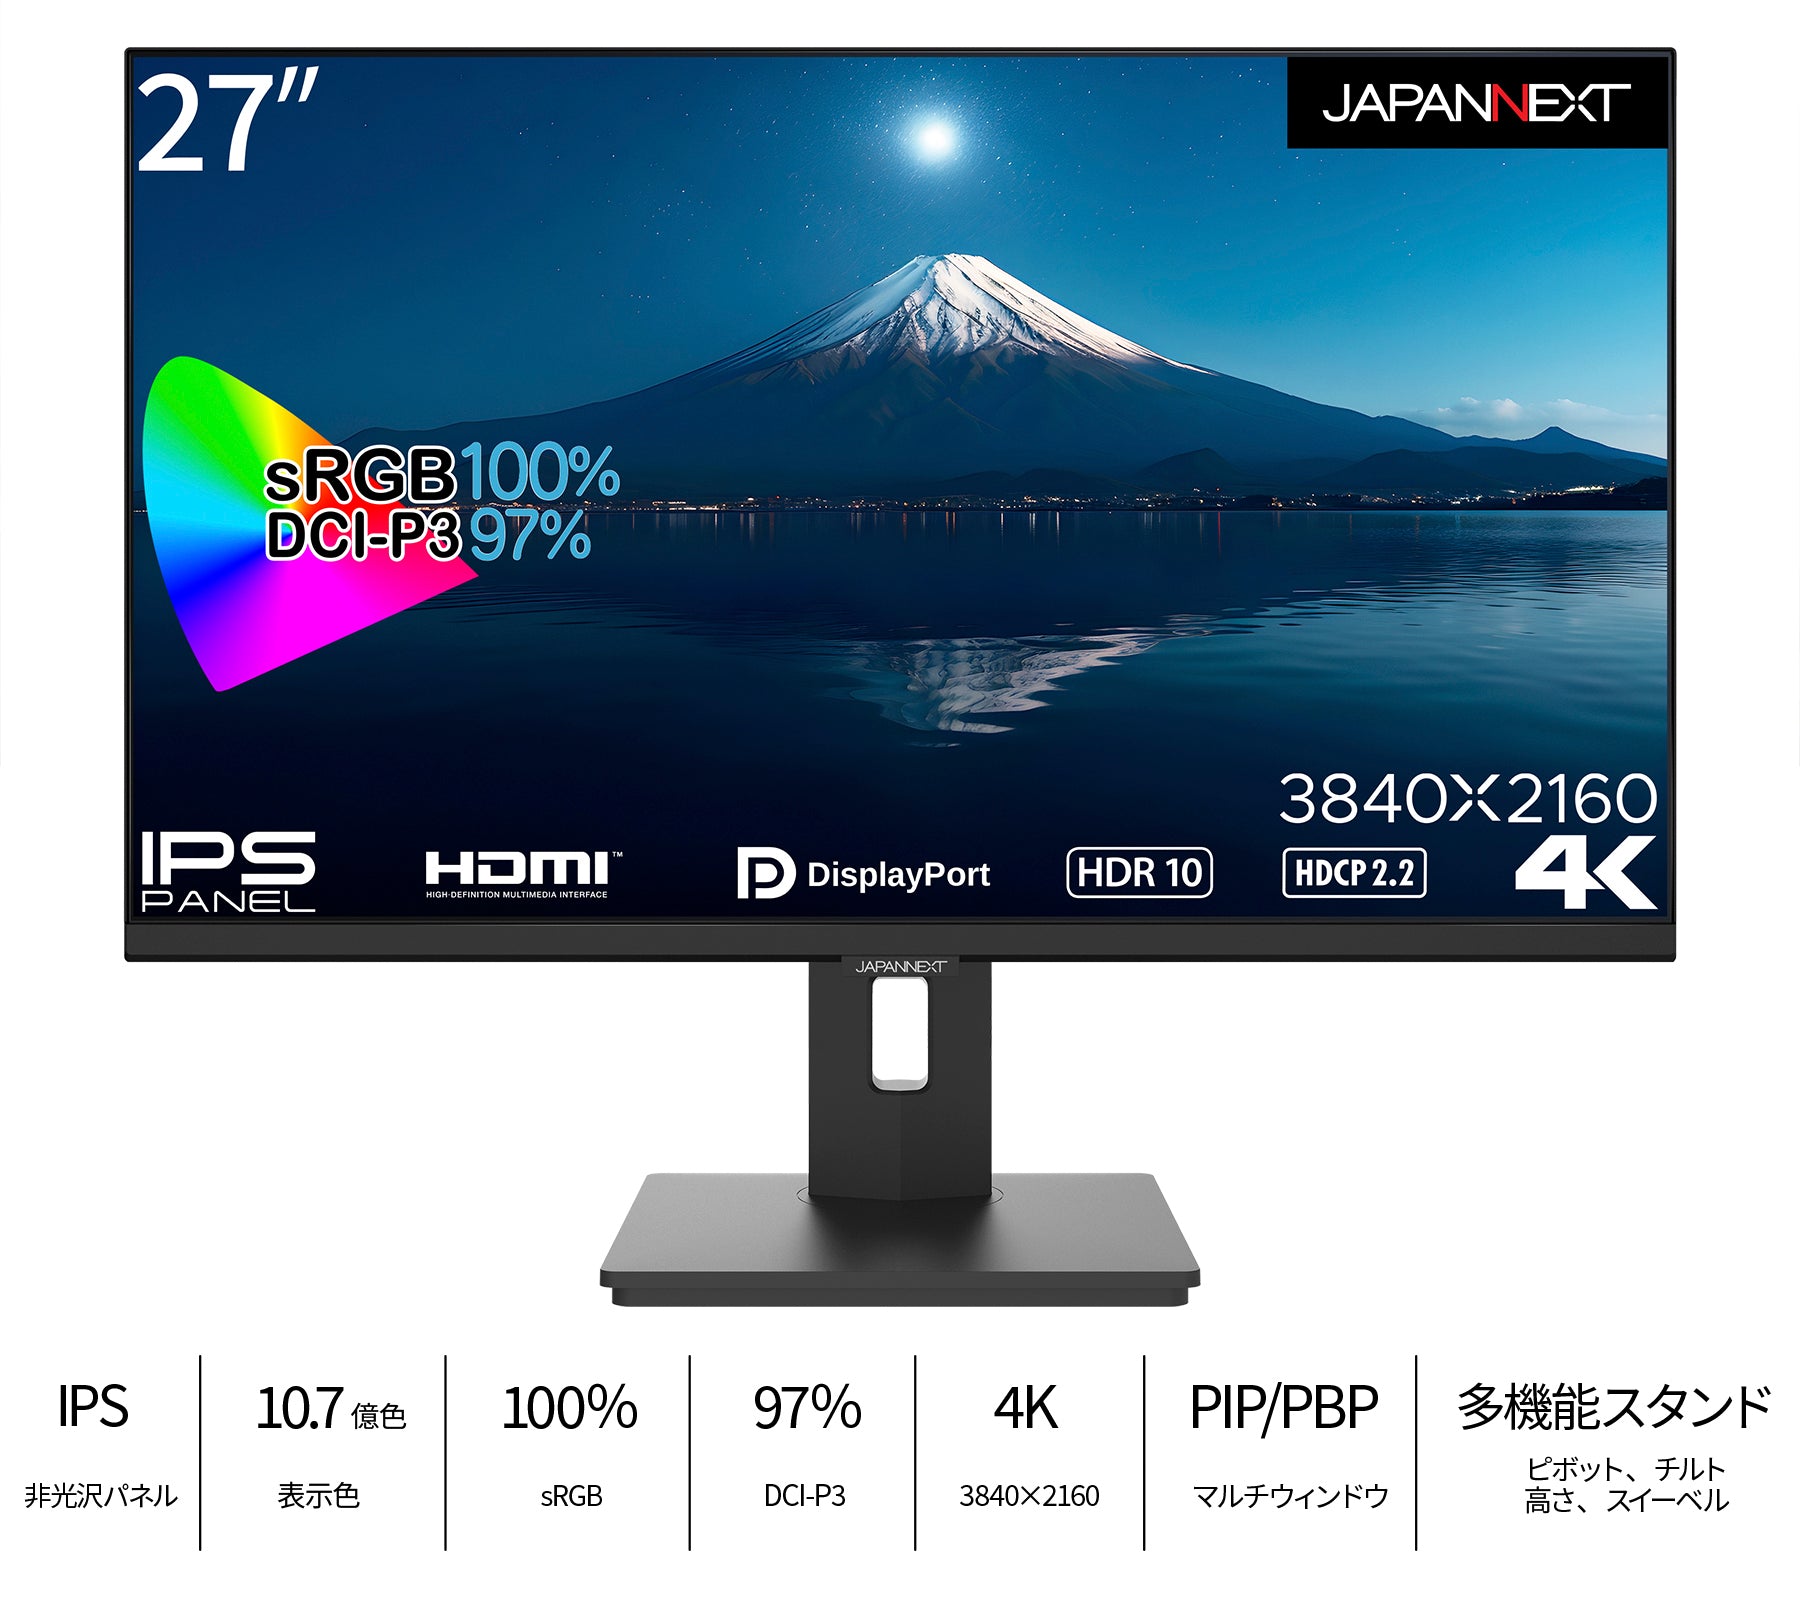 JAPANNEXT 27インチ 昇降式スタンド搭載4K(3840x2160)液晶 